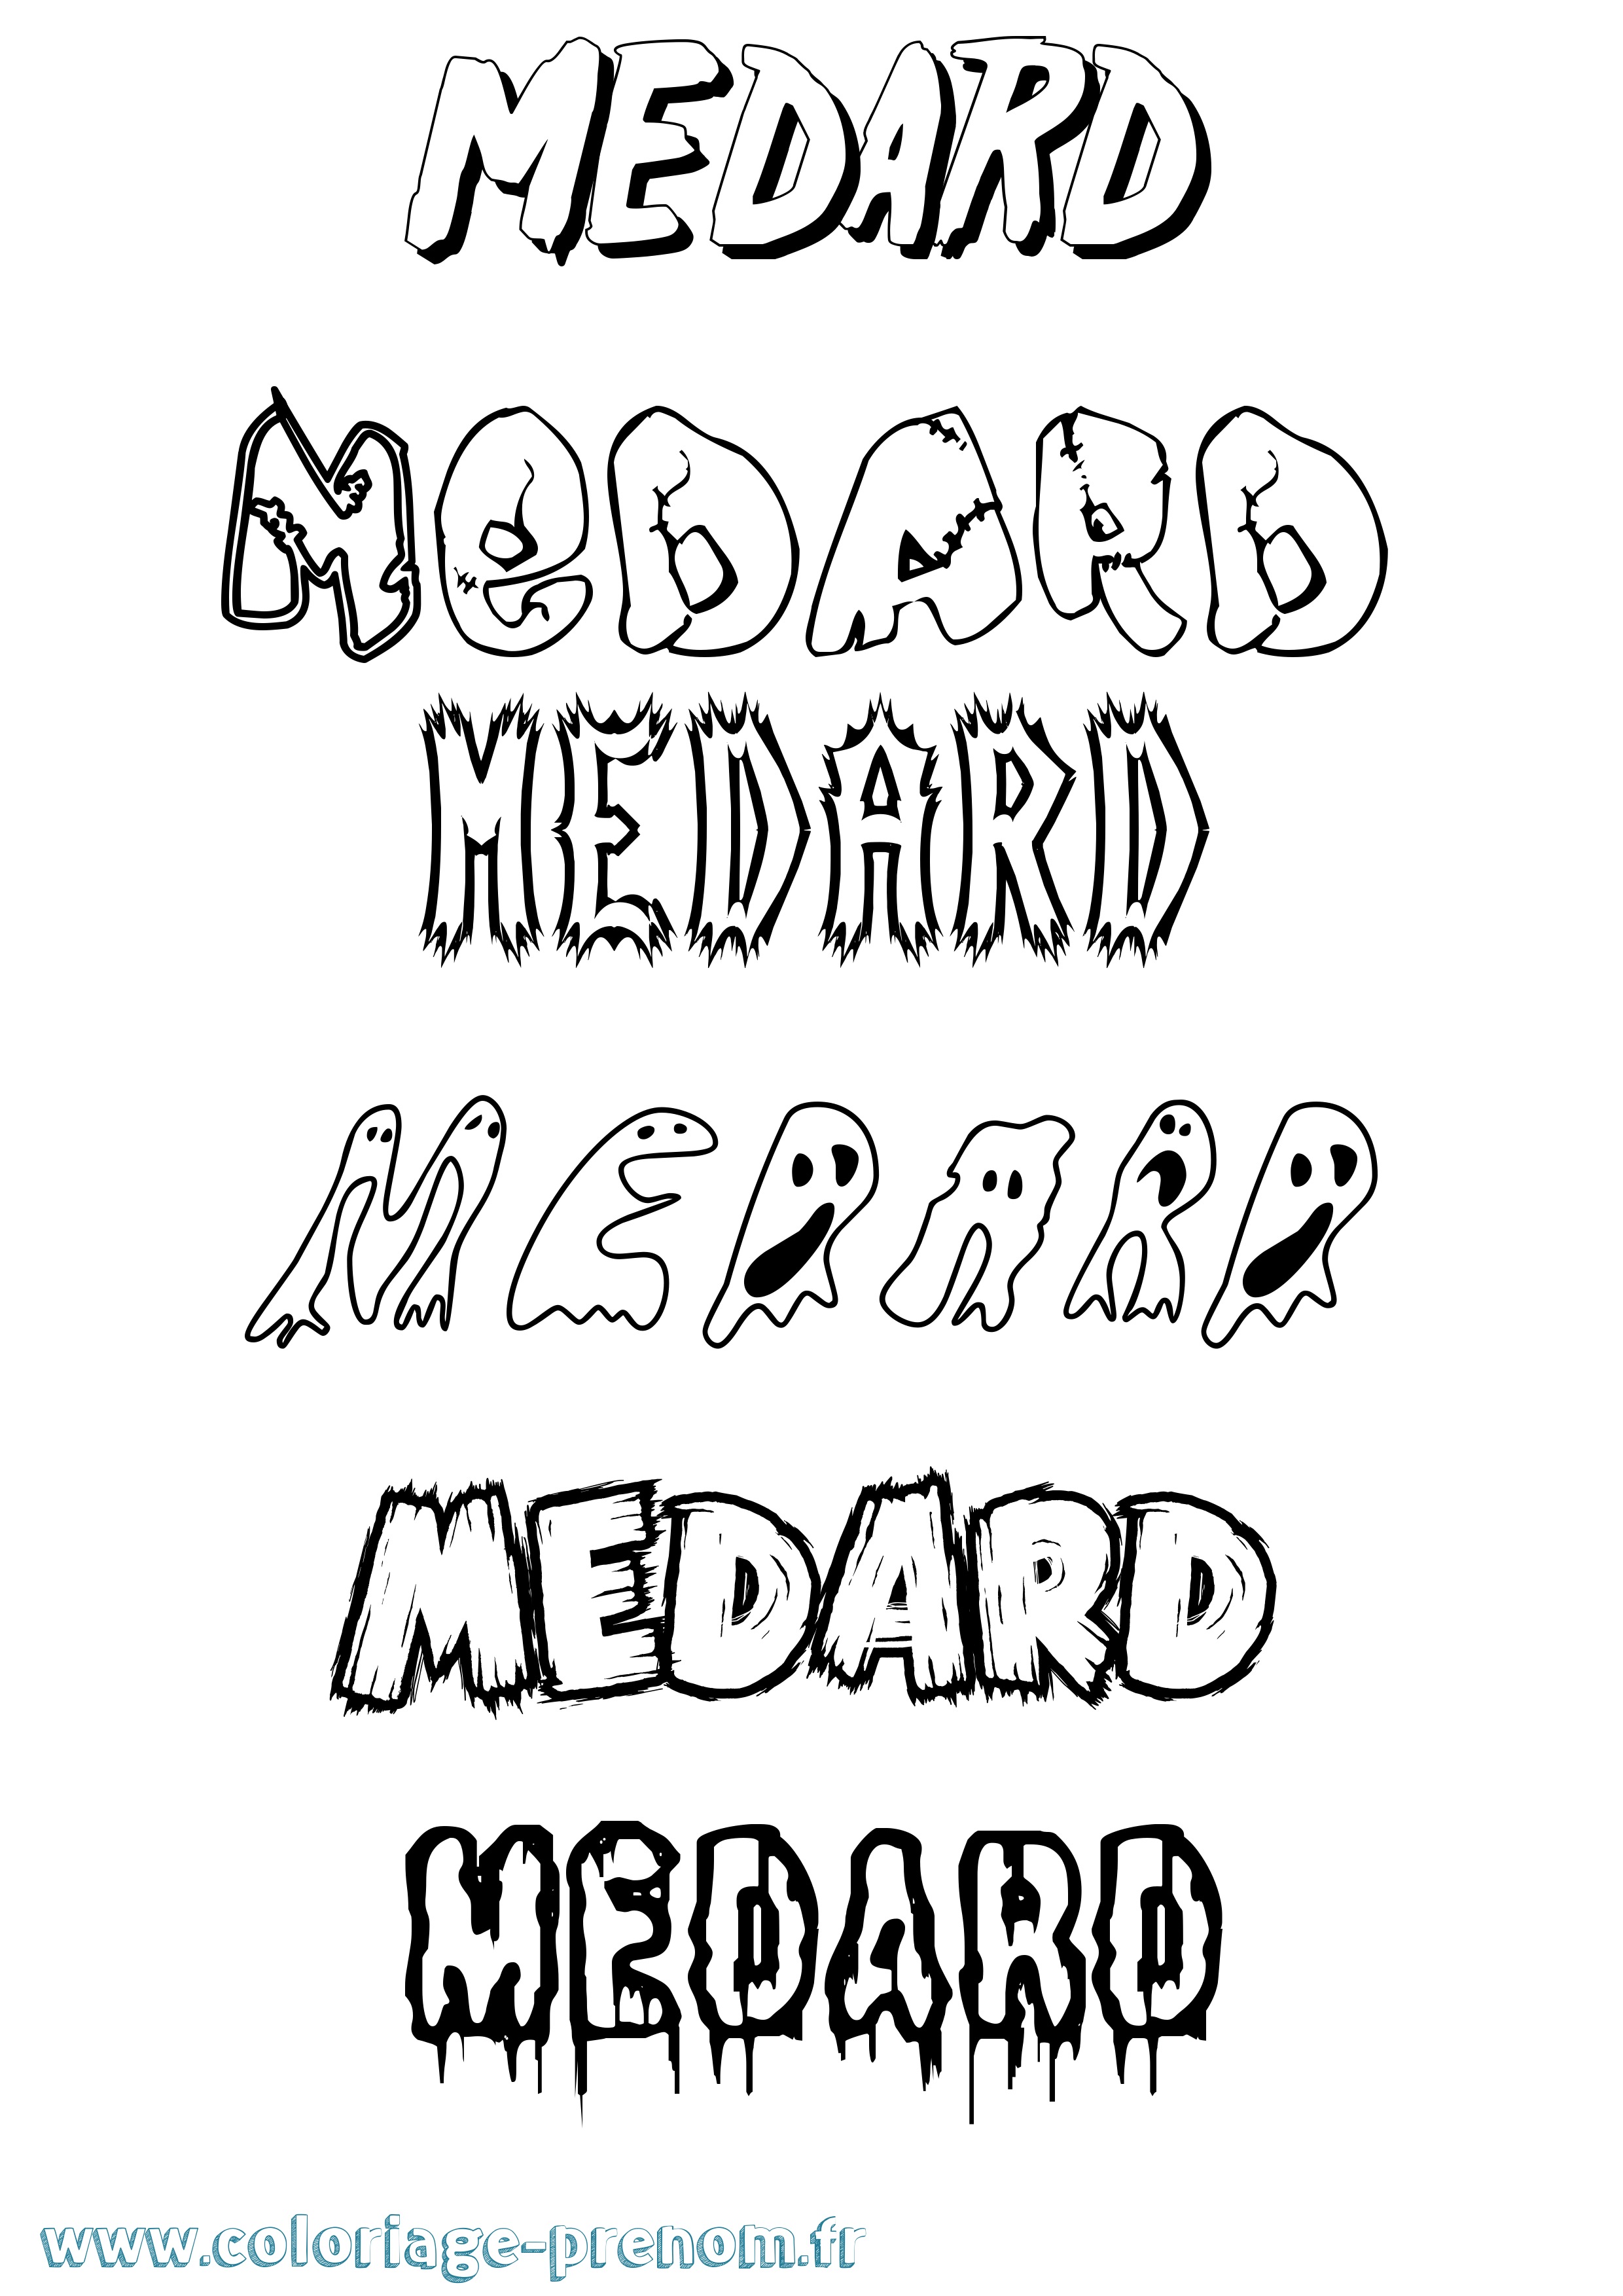 Coloriage prénom Medard Frisson